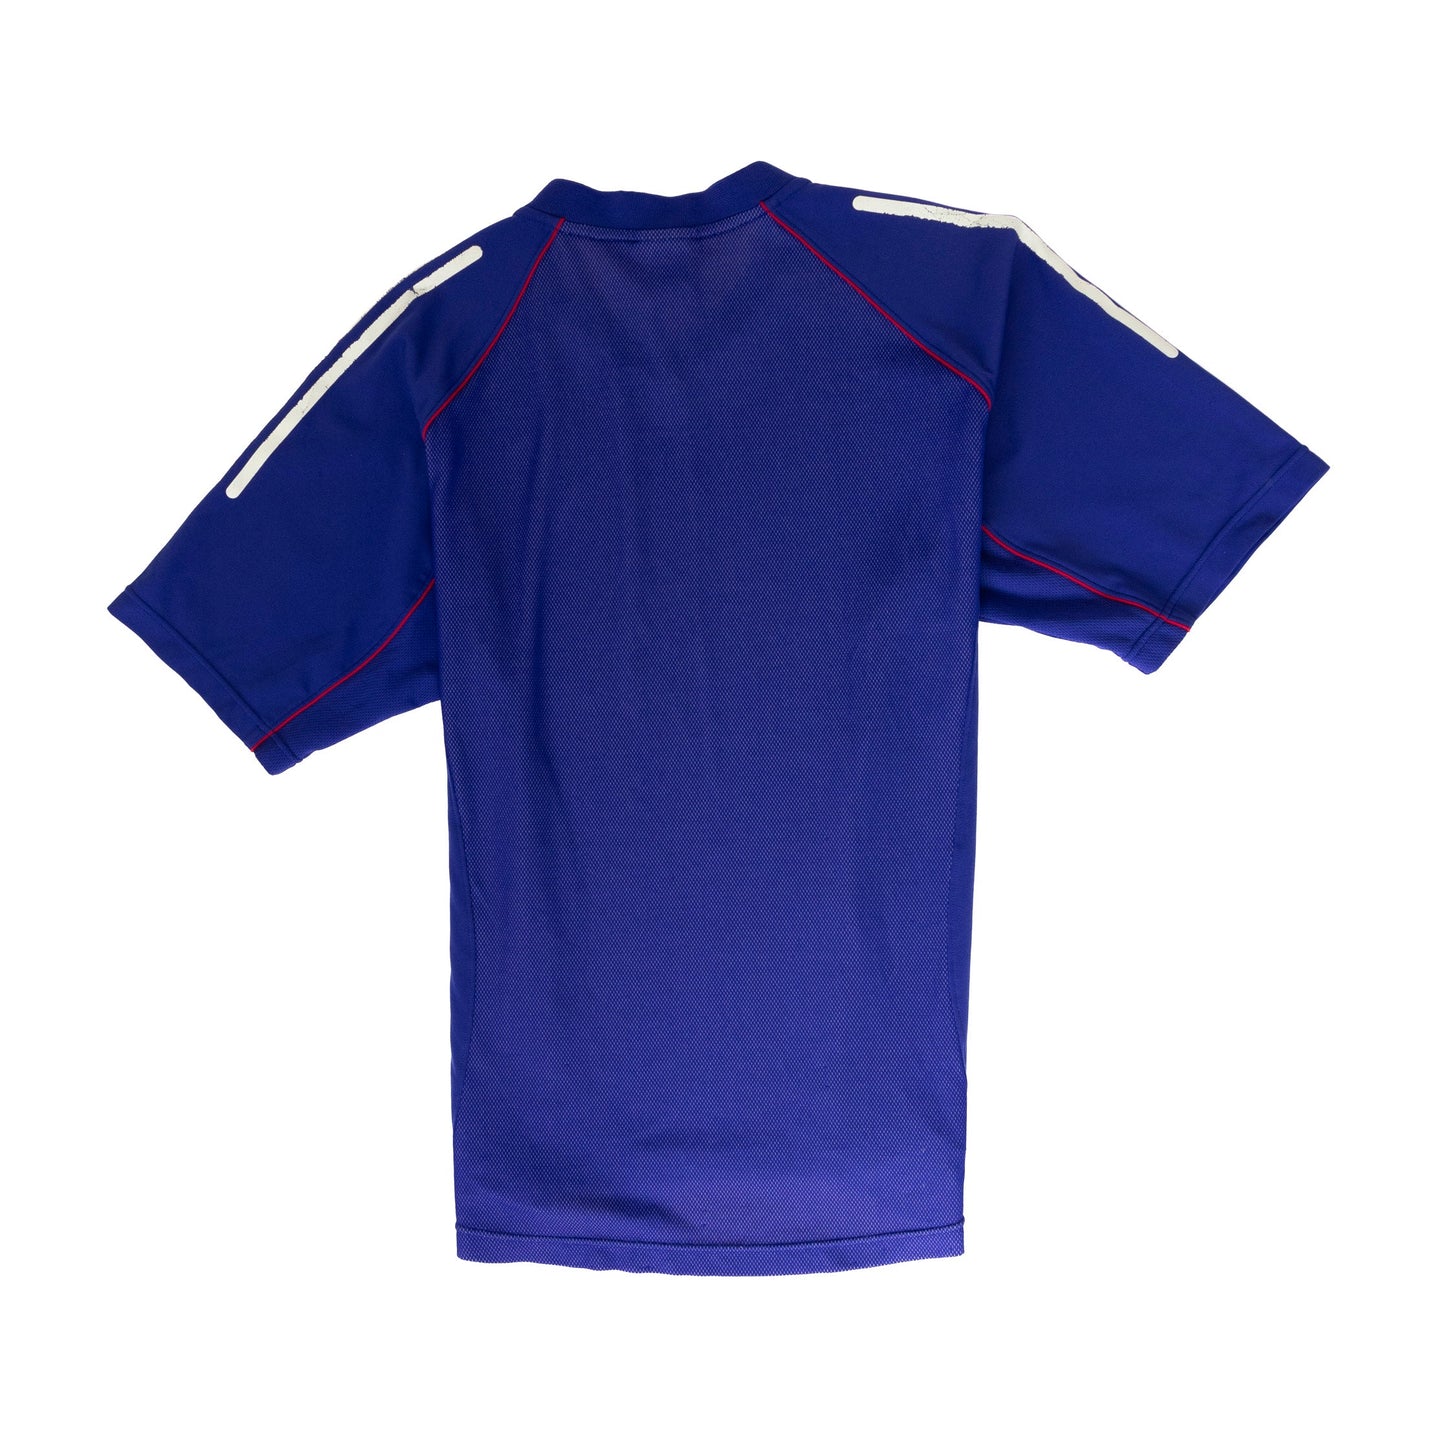 2002/04 Japan x Adidas Home Football Shirt